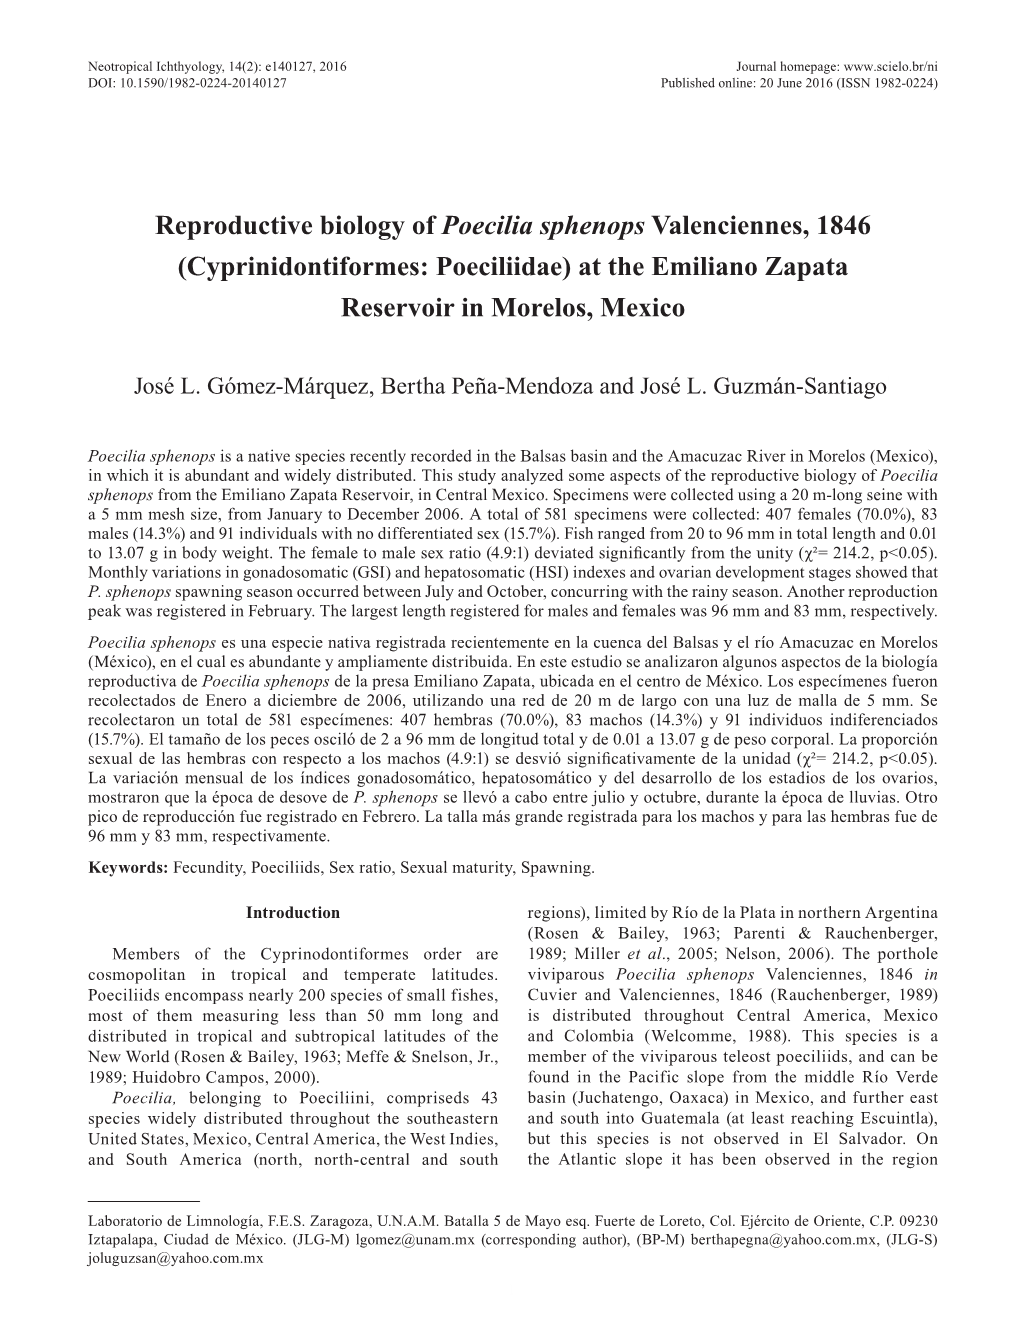 Reproductive Biology of Poecilia Sphenops Valenciennes, 1846 (Cyprinidontiformes: Poeciliidae) at the Emiliano Zapata Reservoir in Morelos, Mexico